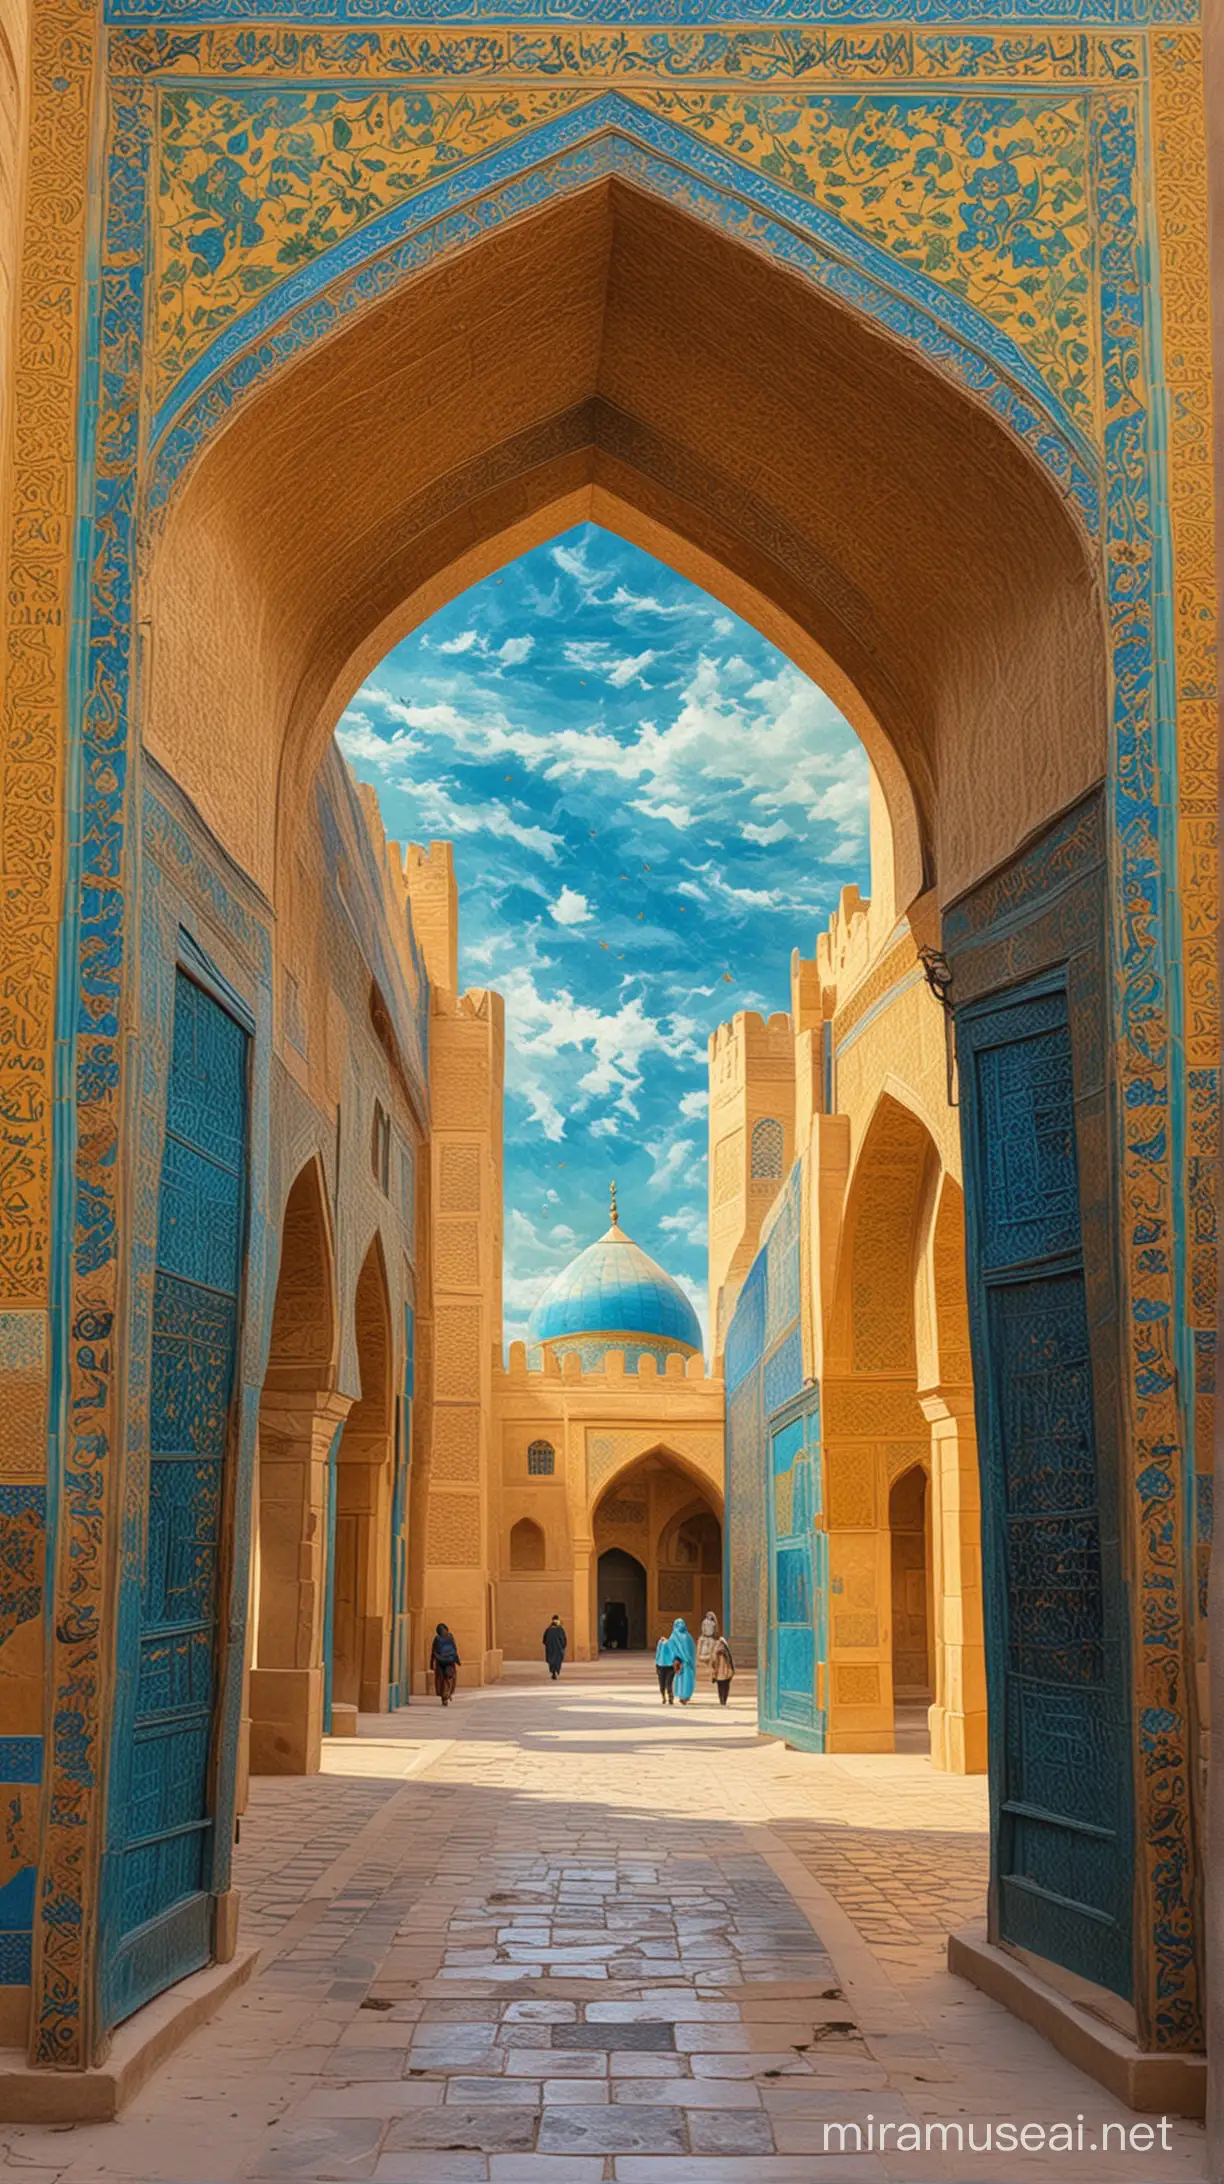 Historic Isfahan Cityscape in Van Gogh Art Style